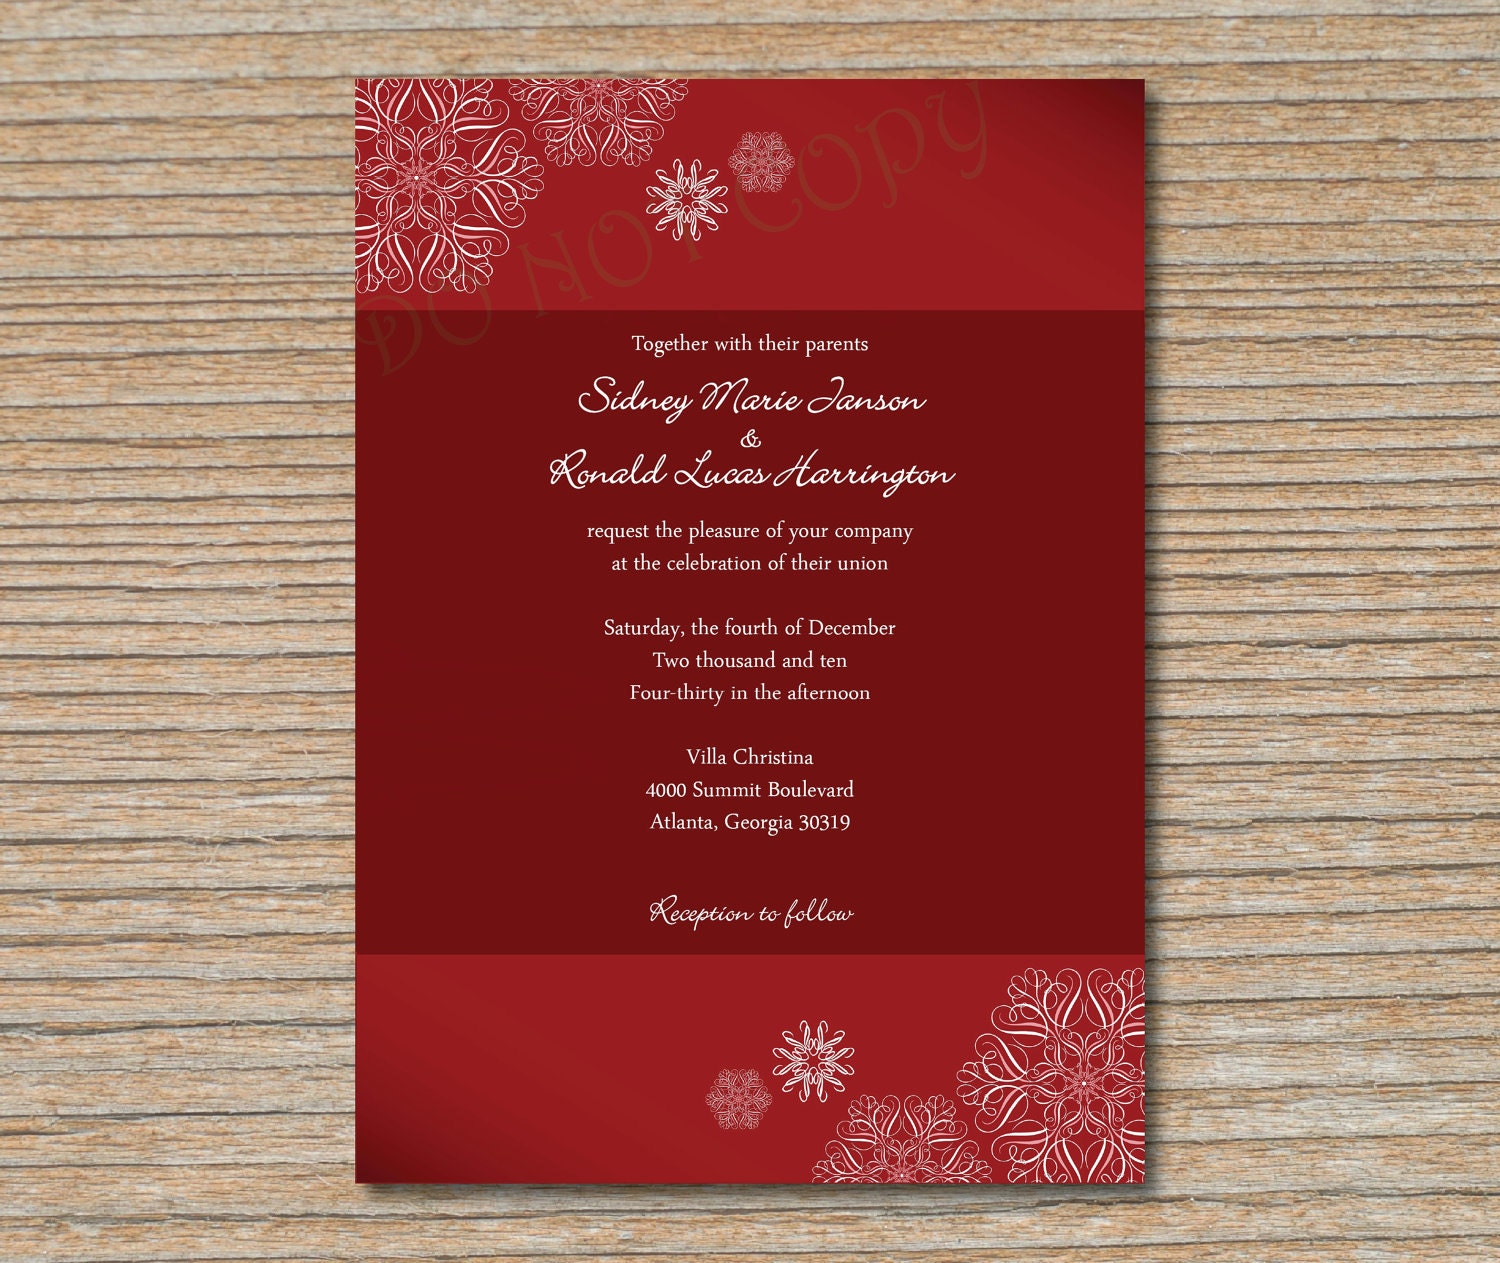 christmas wedding invitations